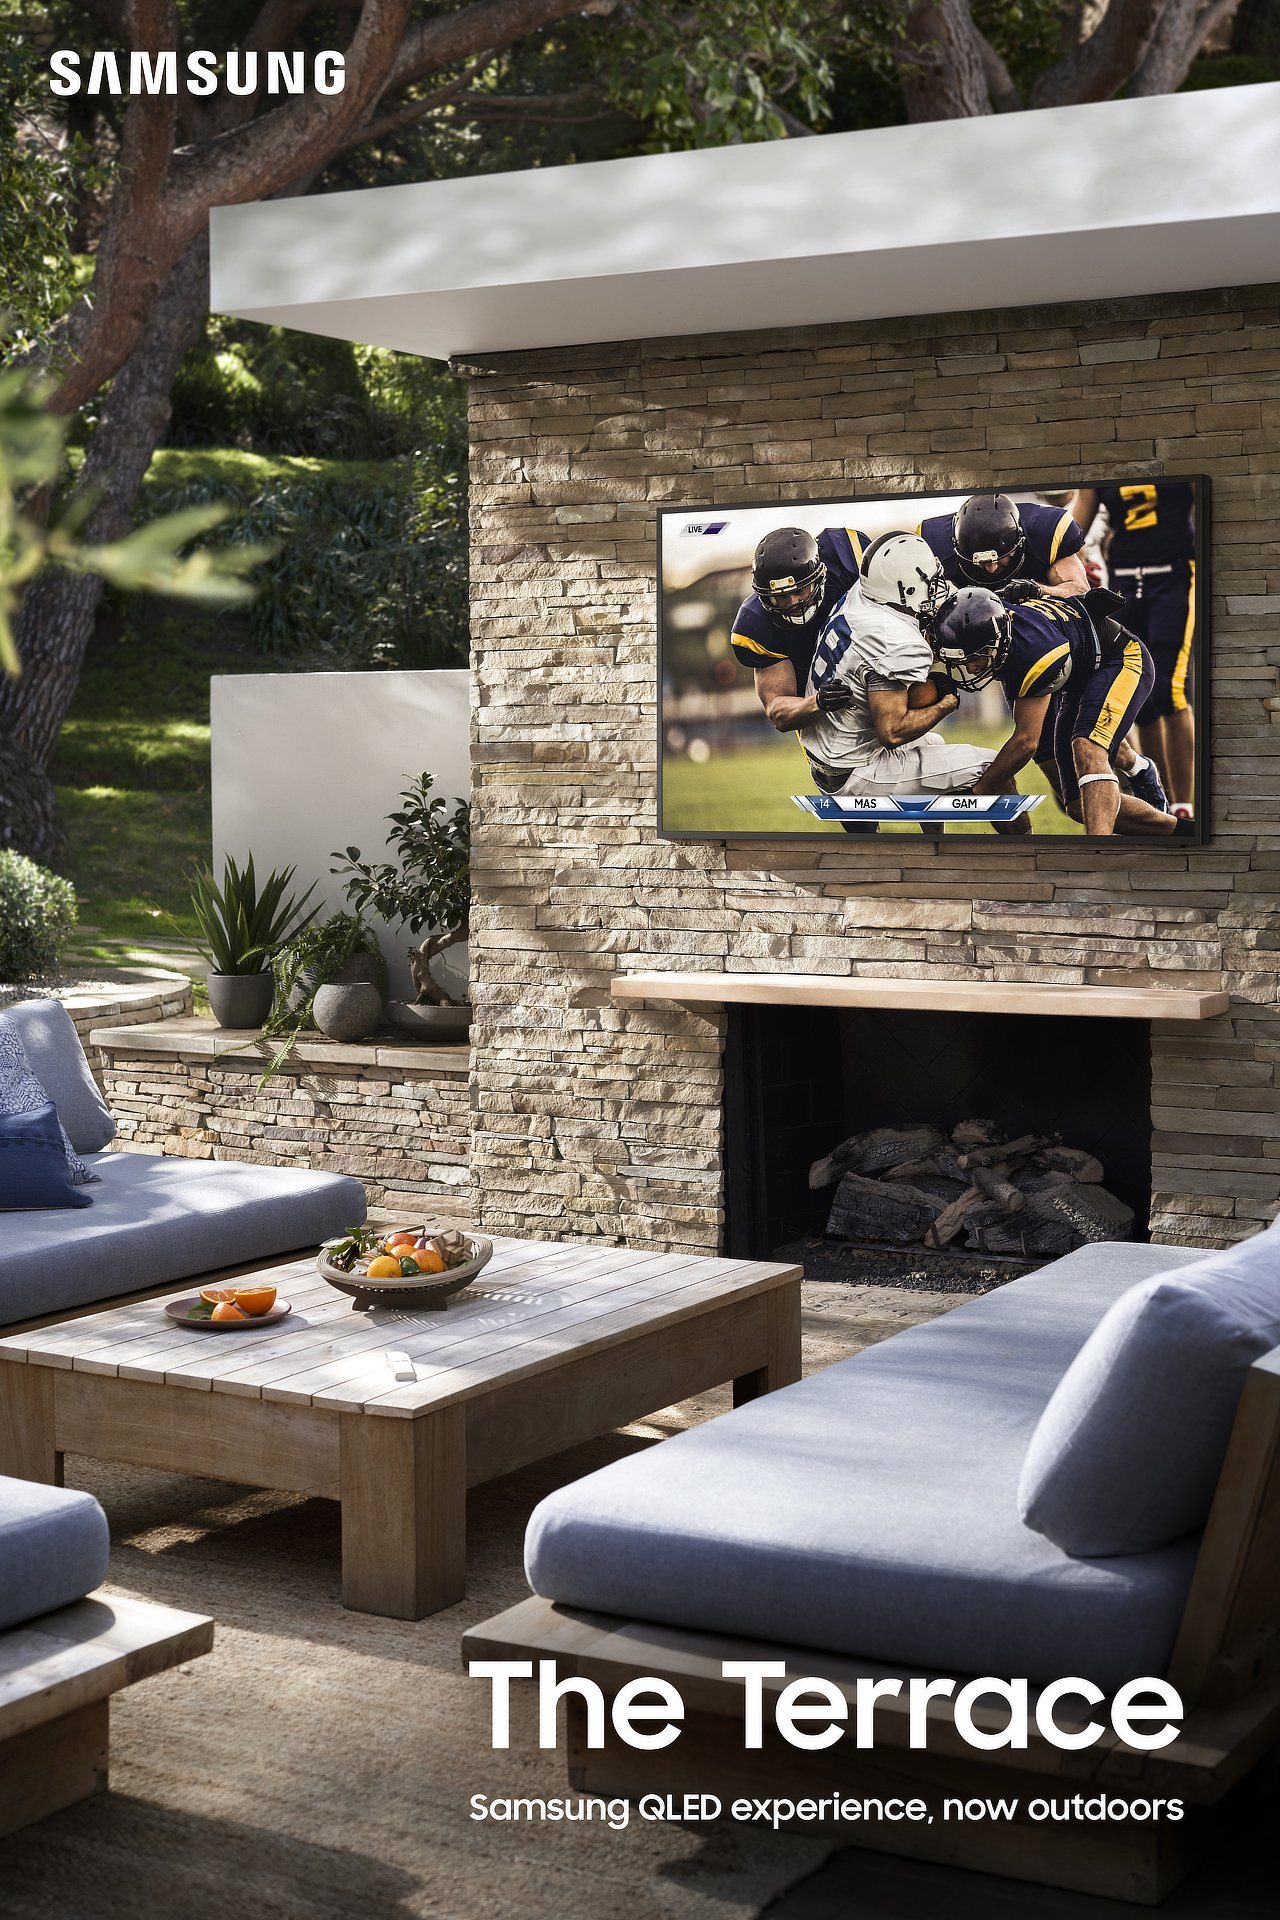 Terrace: Samsung'S First Outdoor 4K Qled Tv